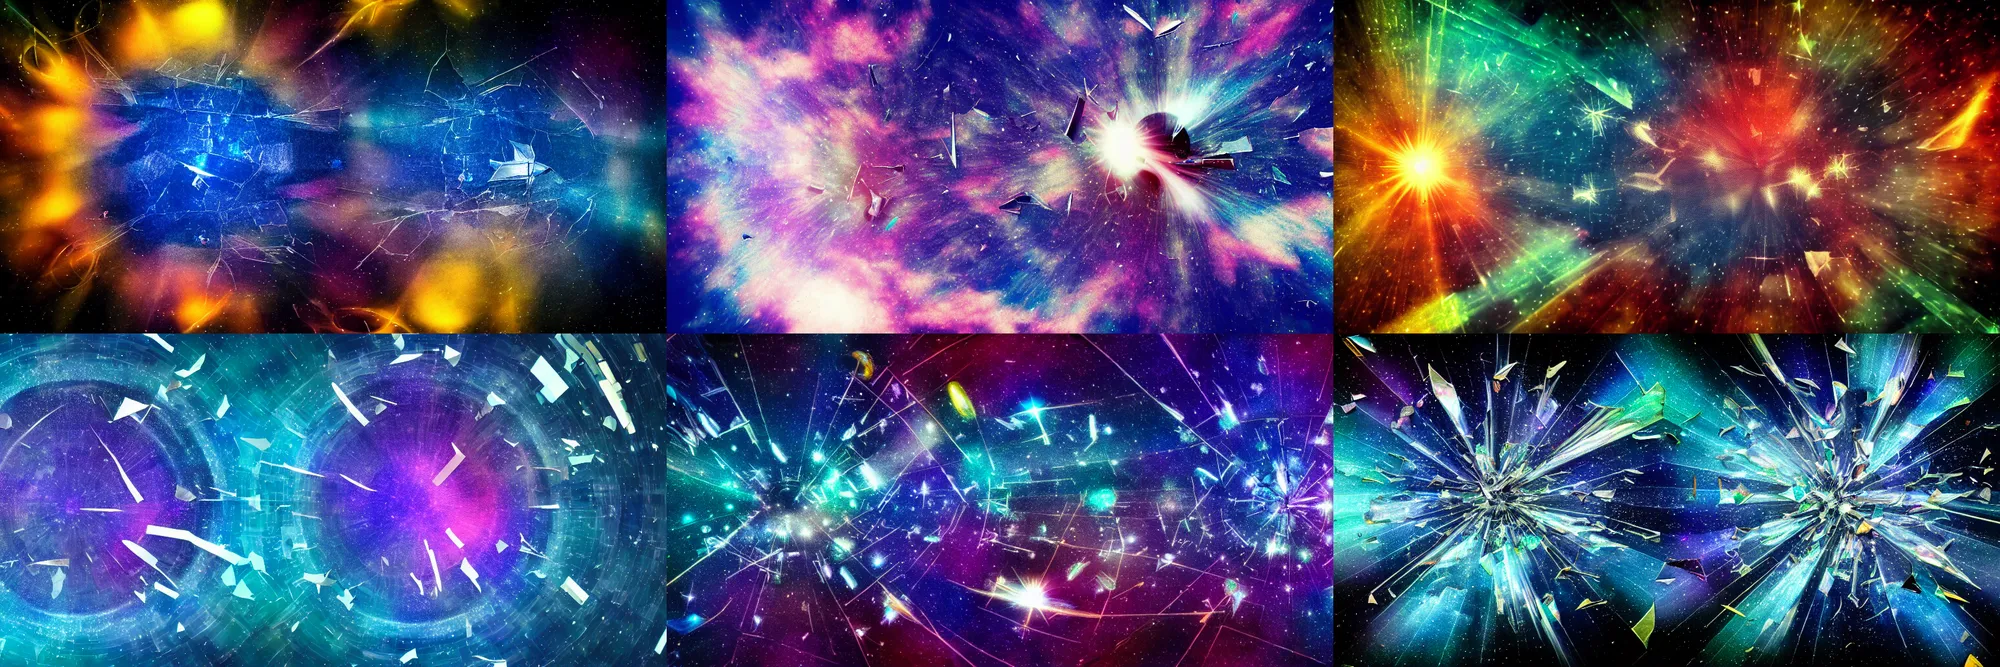 Prompt: flying broken glass shards, outer space nebulas, irregular non-symmetrical fractals, fisheye lens, distortion, motion blur